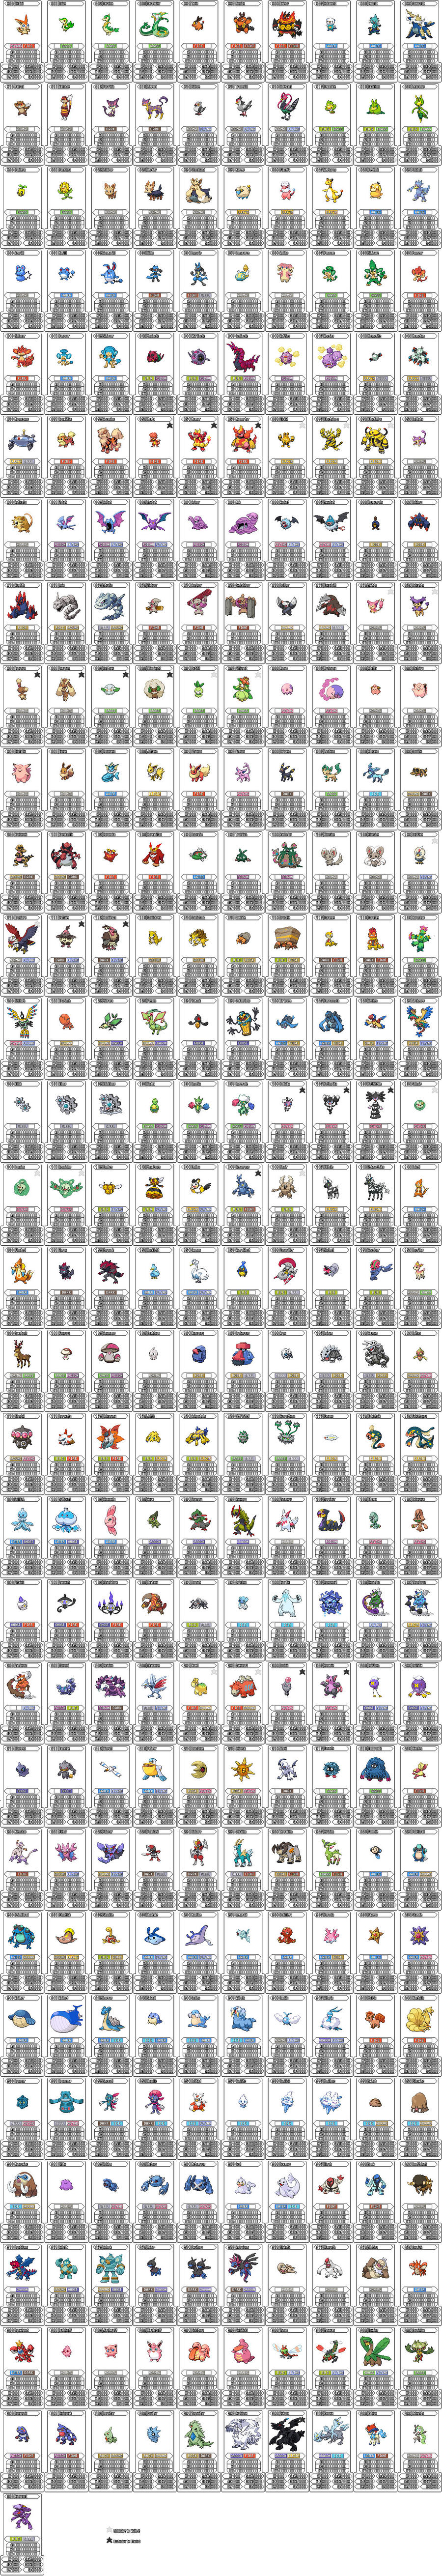 All Black 2 and White 2 Pokemon Sprites by kingolimar354 on DeviantArt